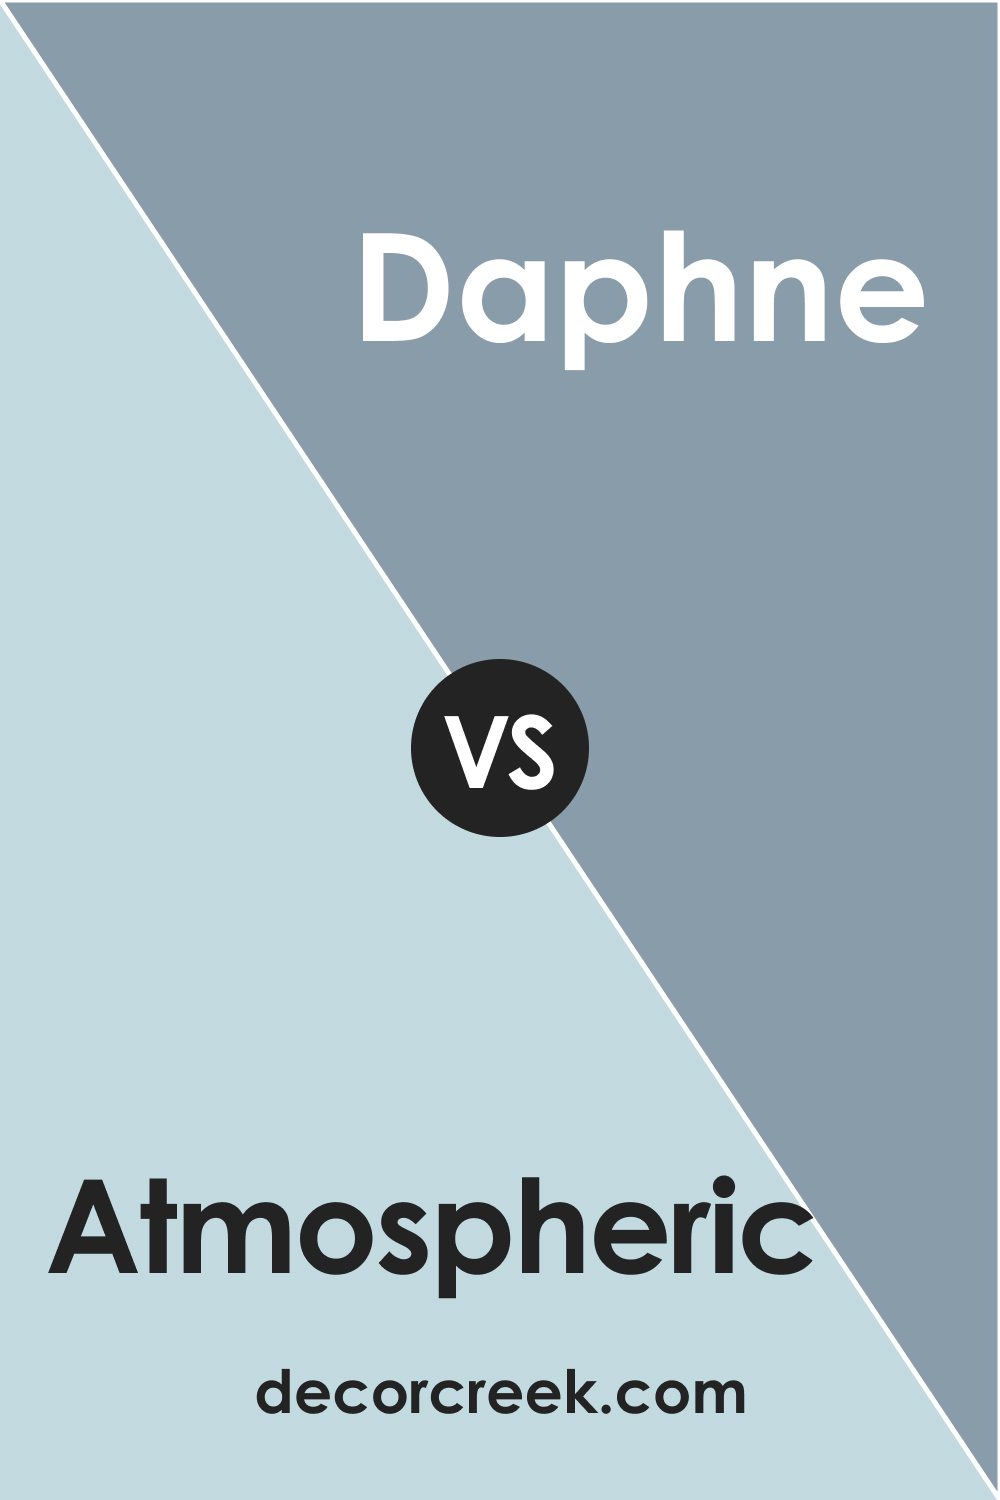 Atmospheric vs Daphne